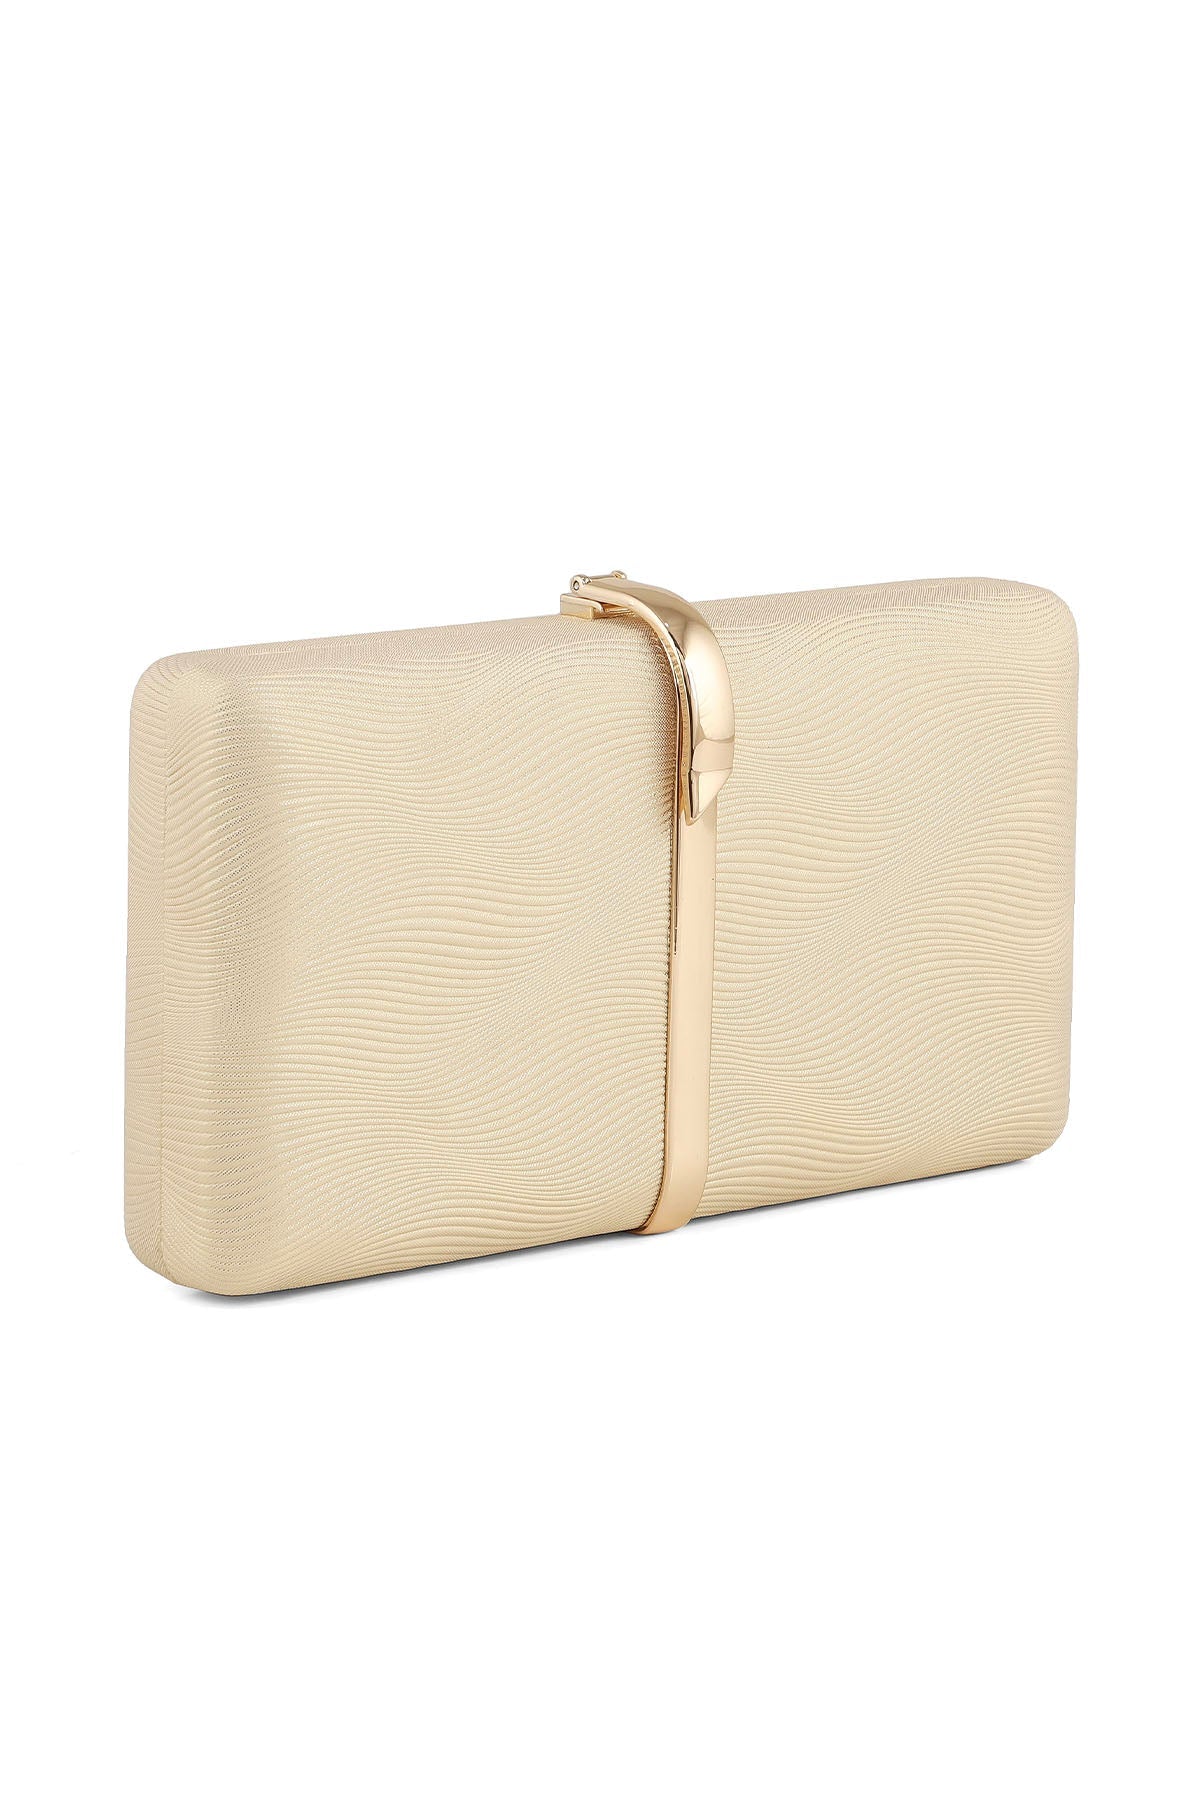 Flap Shoulder Bags B21571-Golden